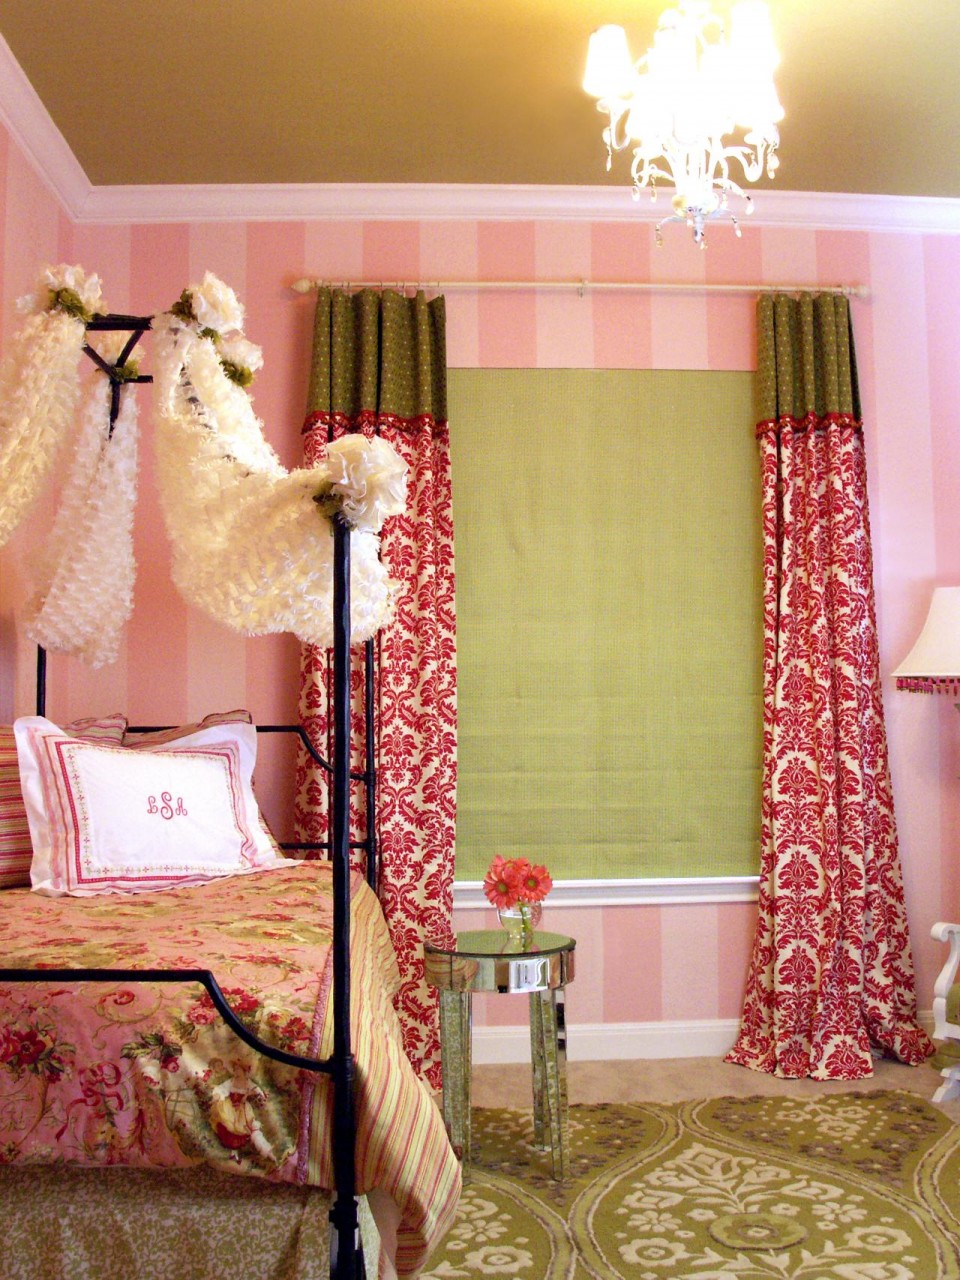 DP_Callan-pink-paris-room_s3x4.jpg.rend.hgtvcom.1280.1707